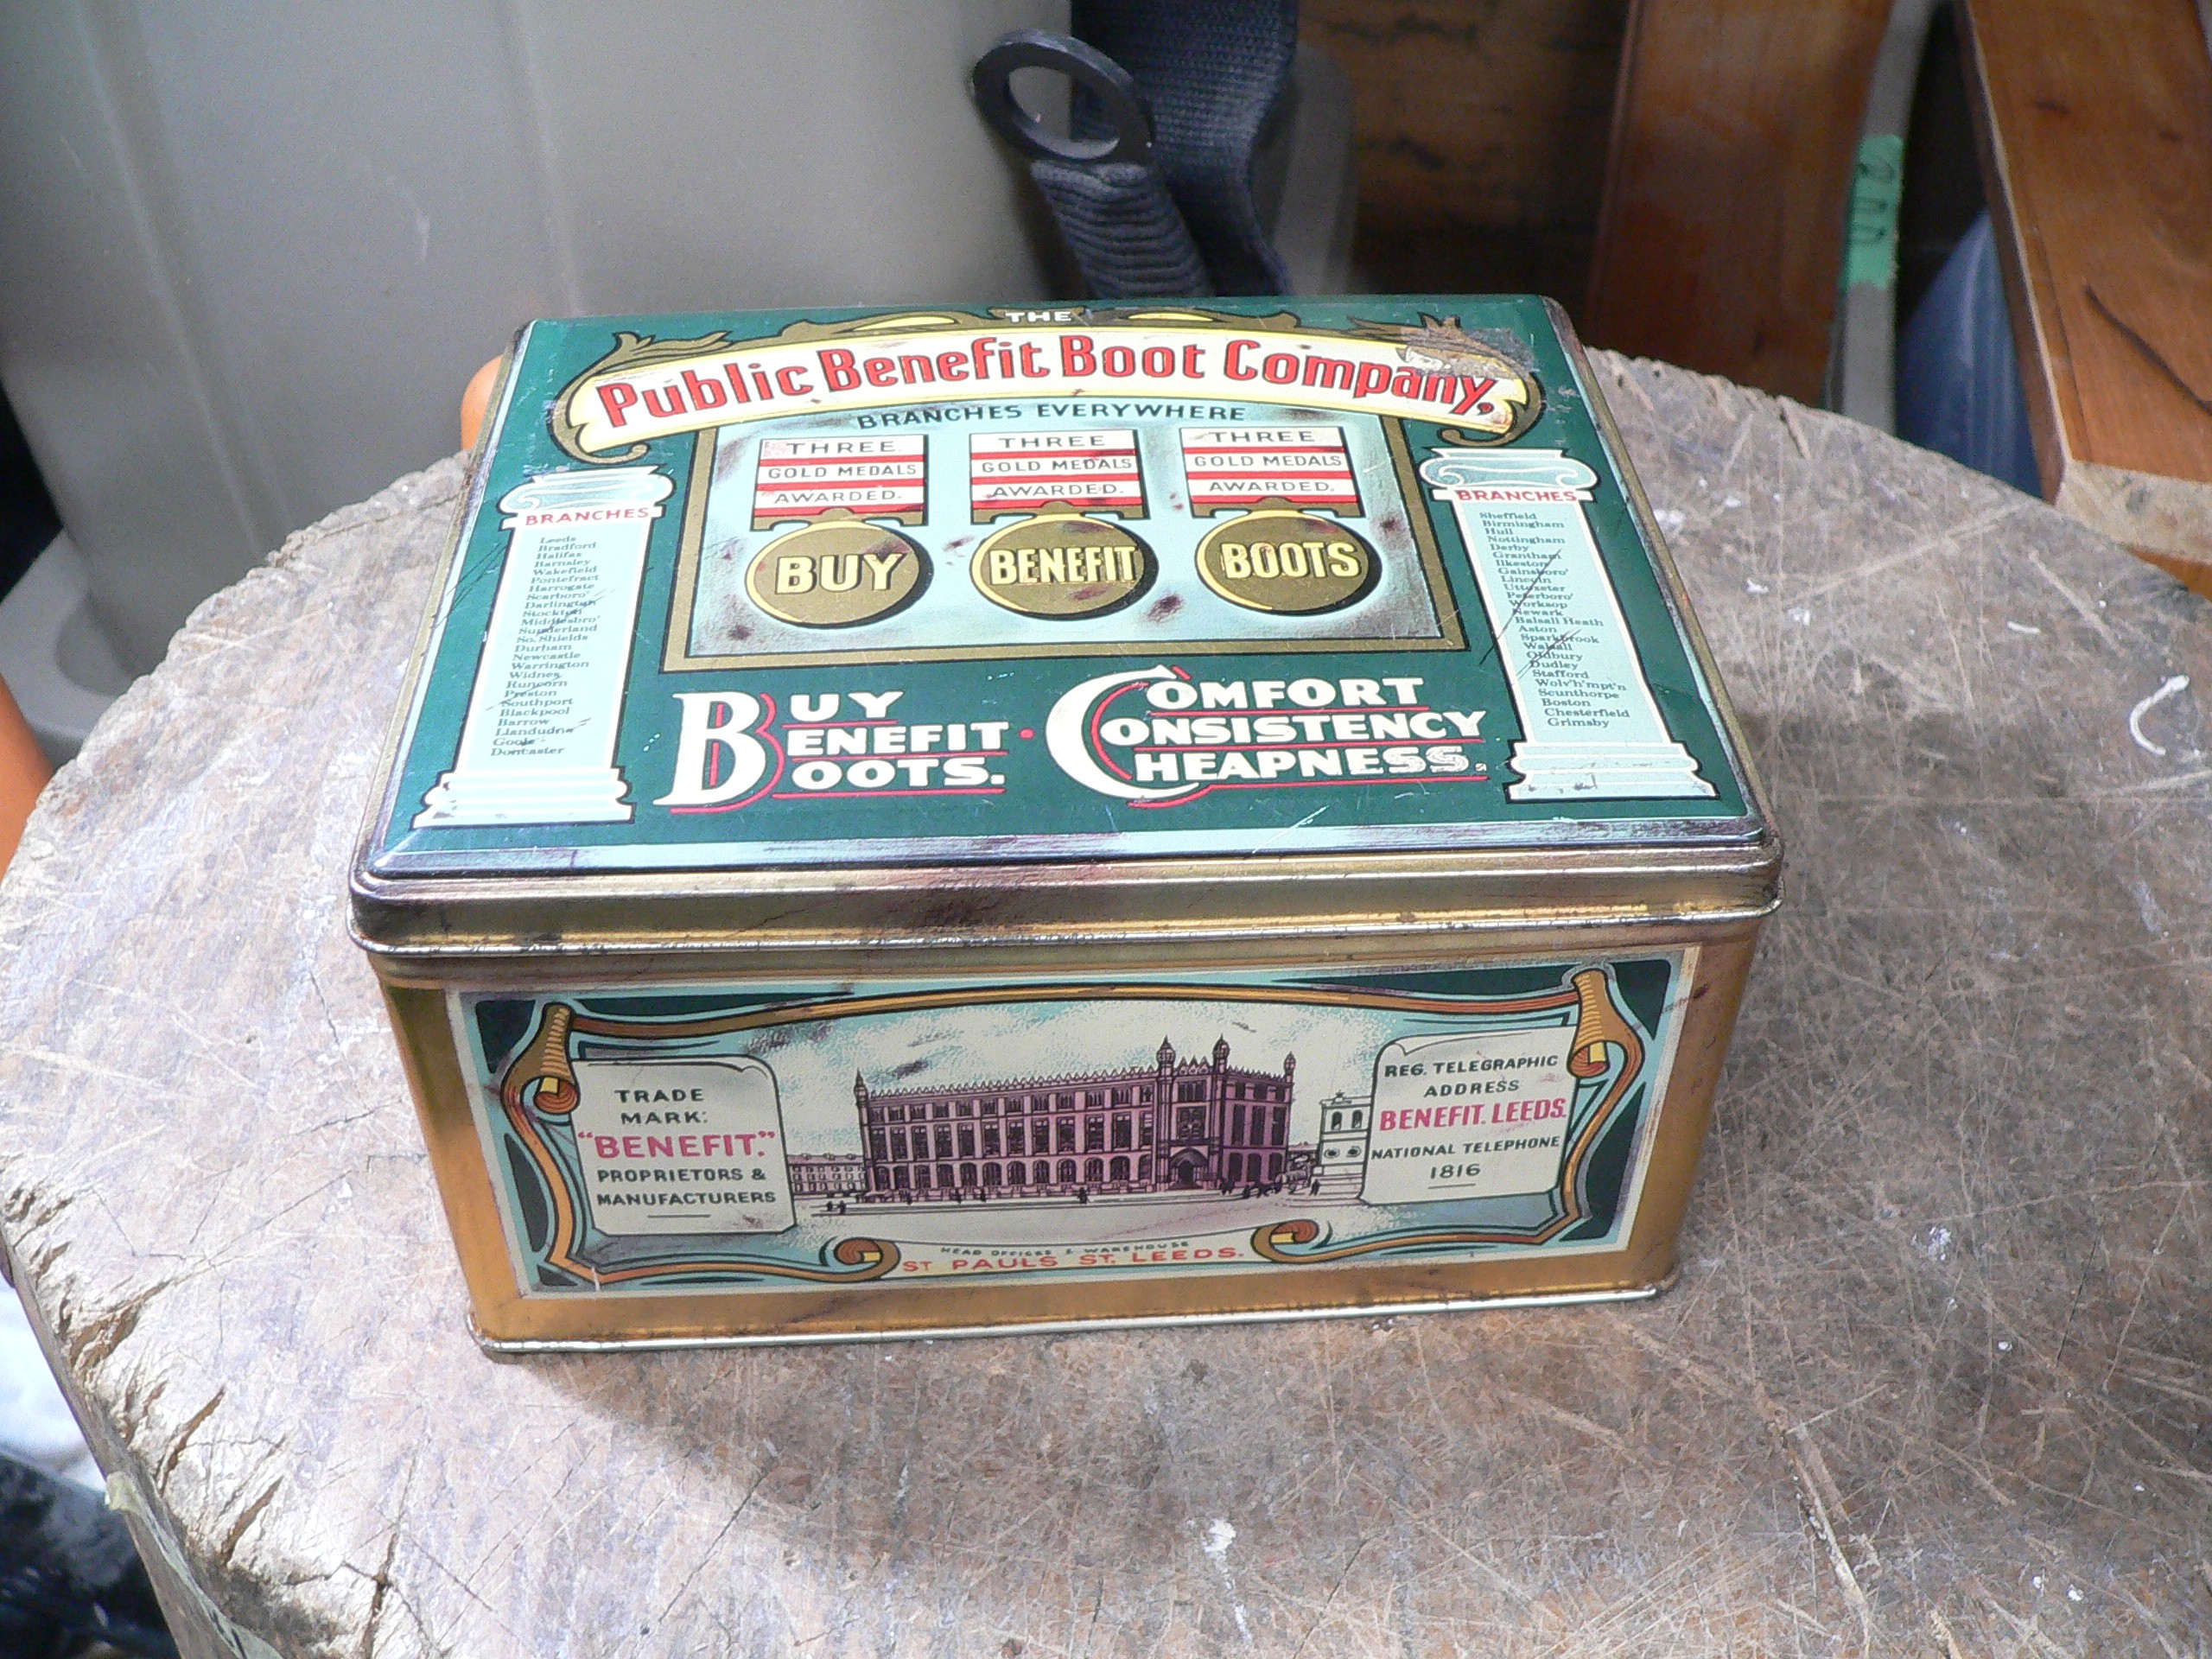 Canne vintage public benefit boot company # 10751.1 